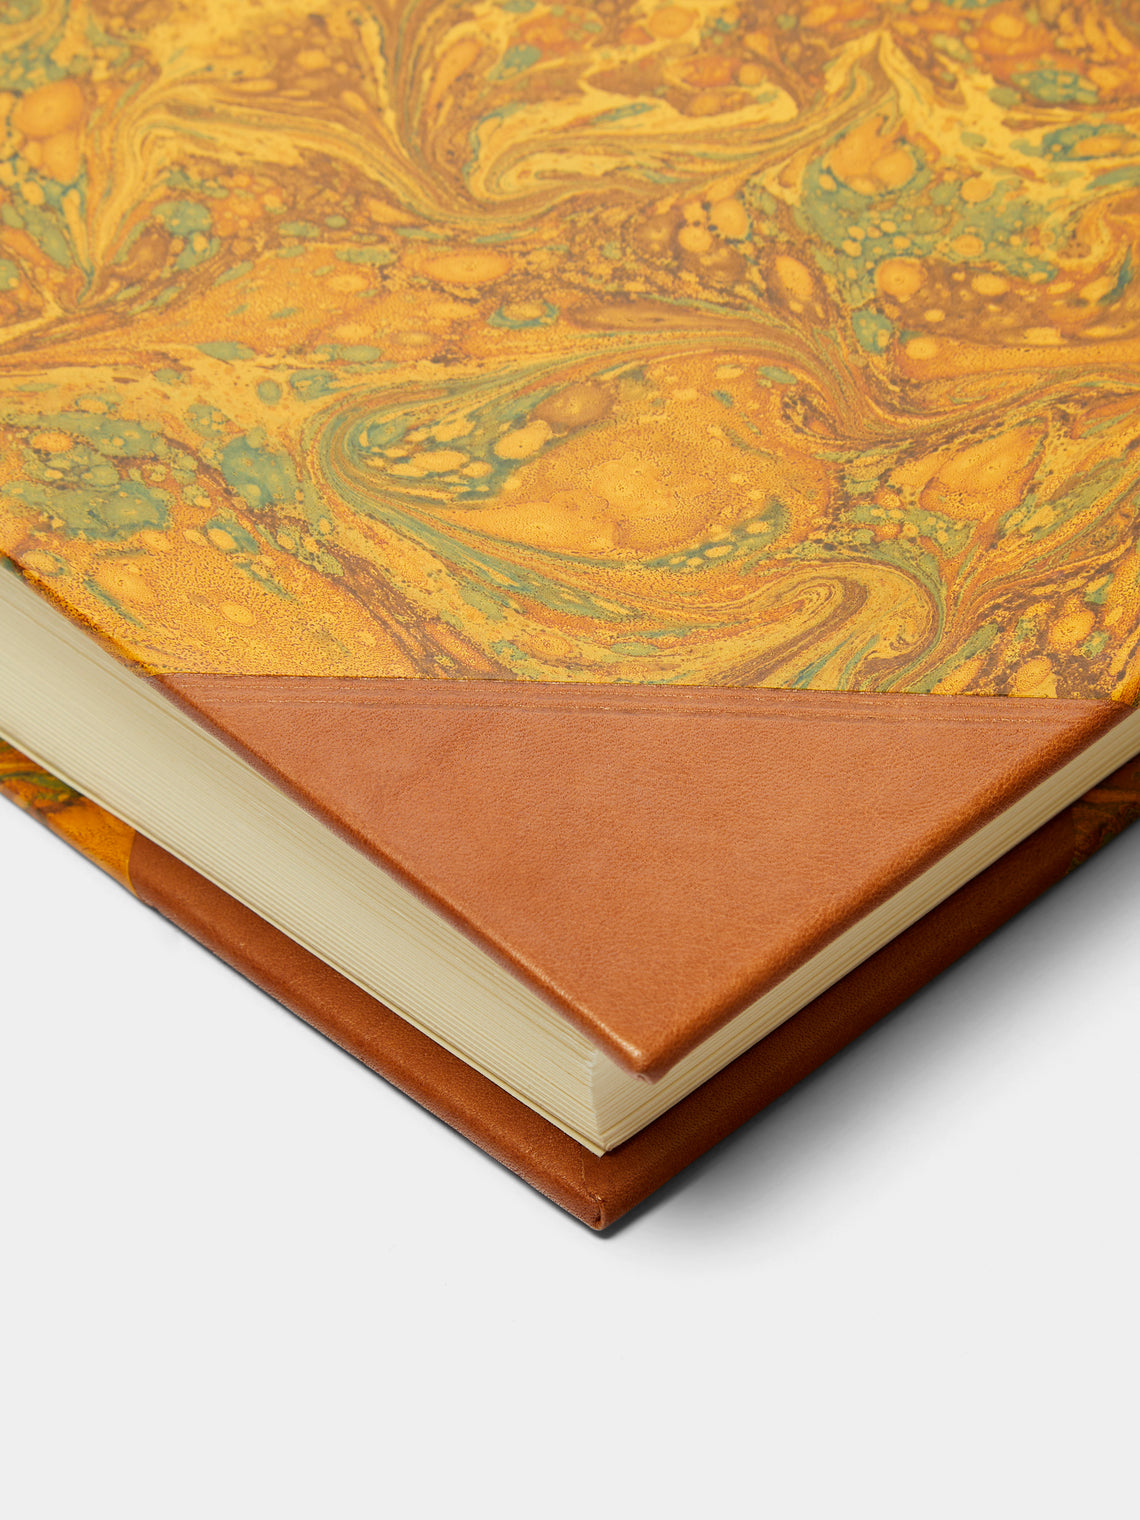 Giannini Firenze - Hand-Marbled Leather Bound Photo Album (35cm x 35cm) - Orange - ABASK